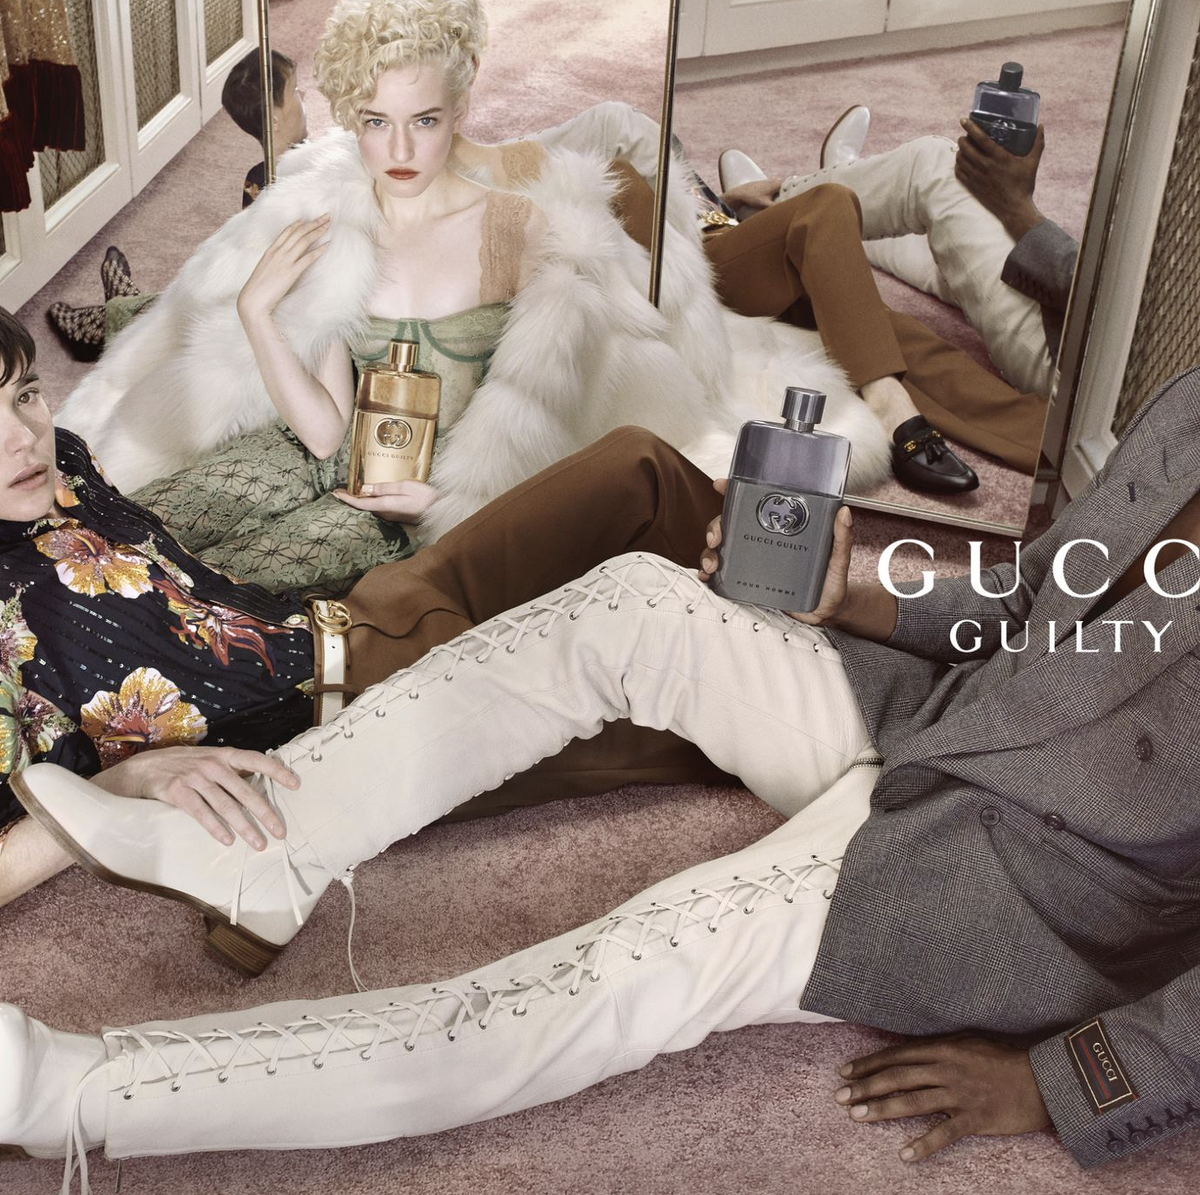 Gucci - Gucci added a new photo.